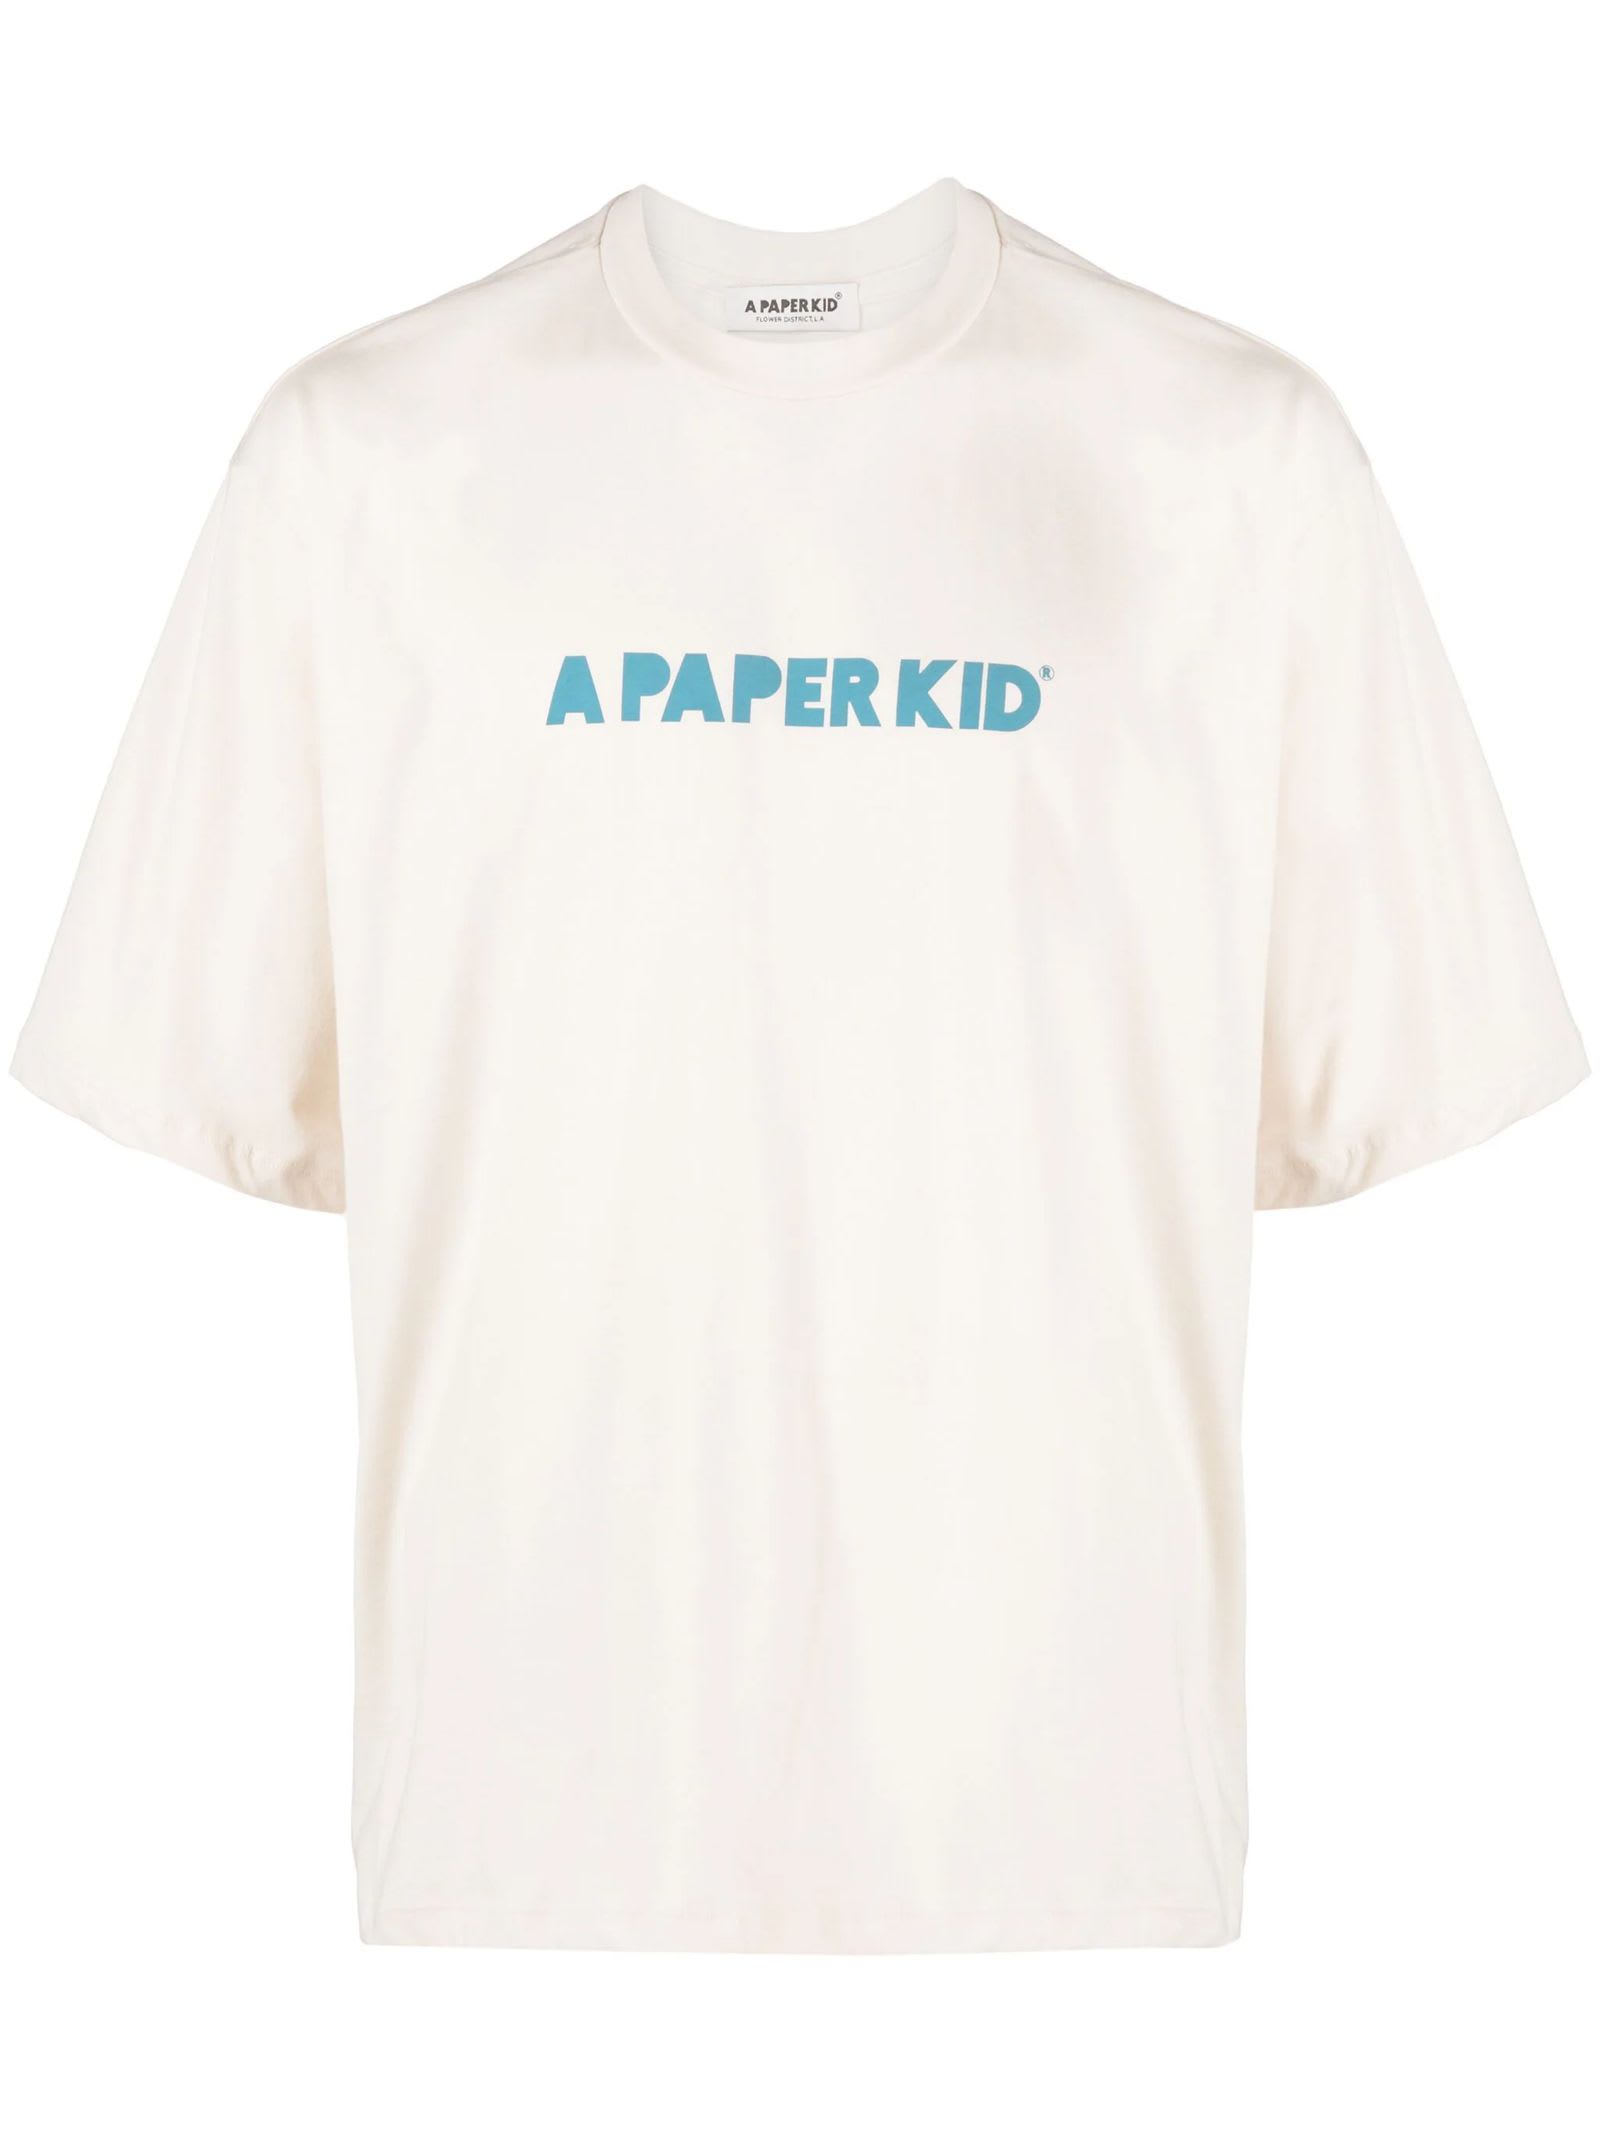 A PAPER KID CREAM WHITE COTTON T-SHIRT